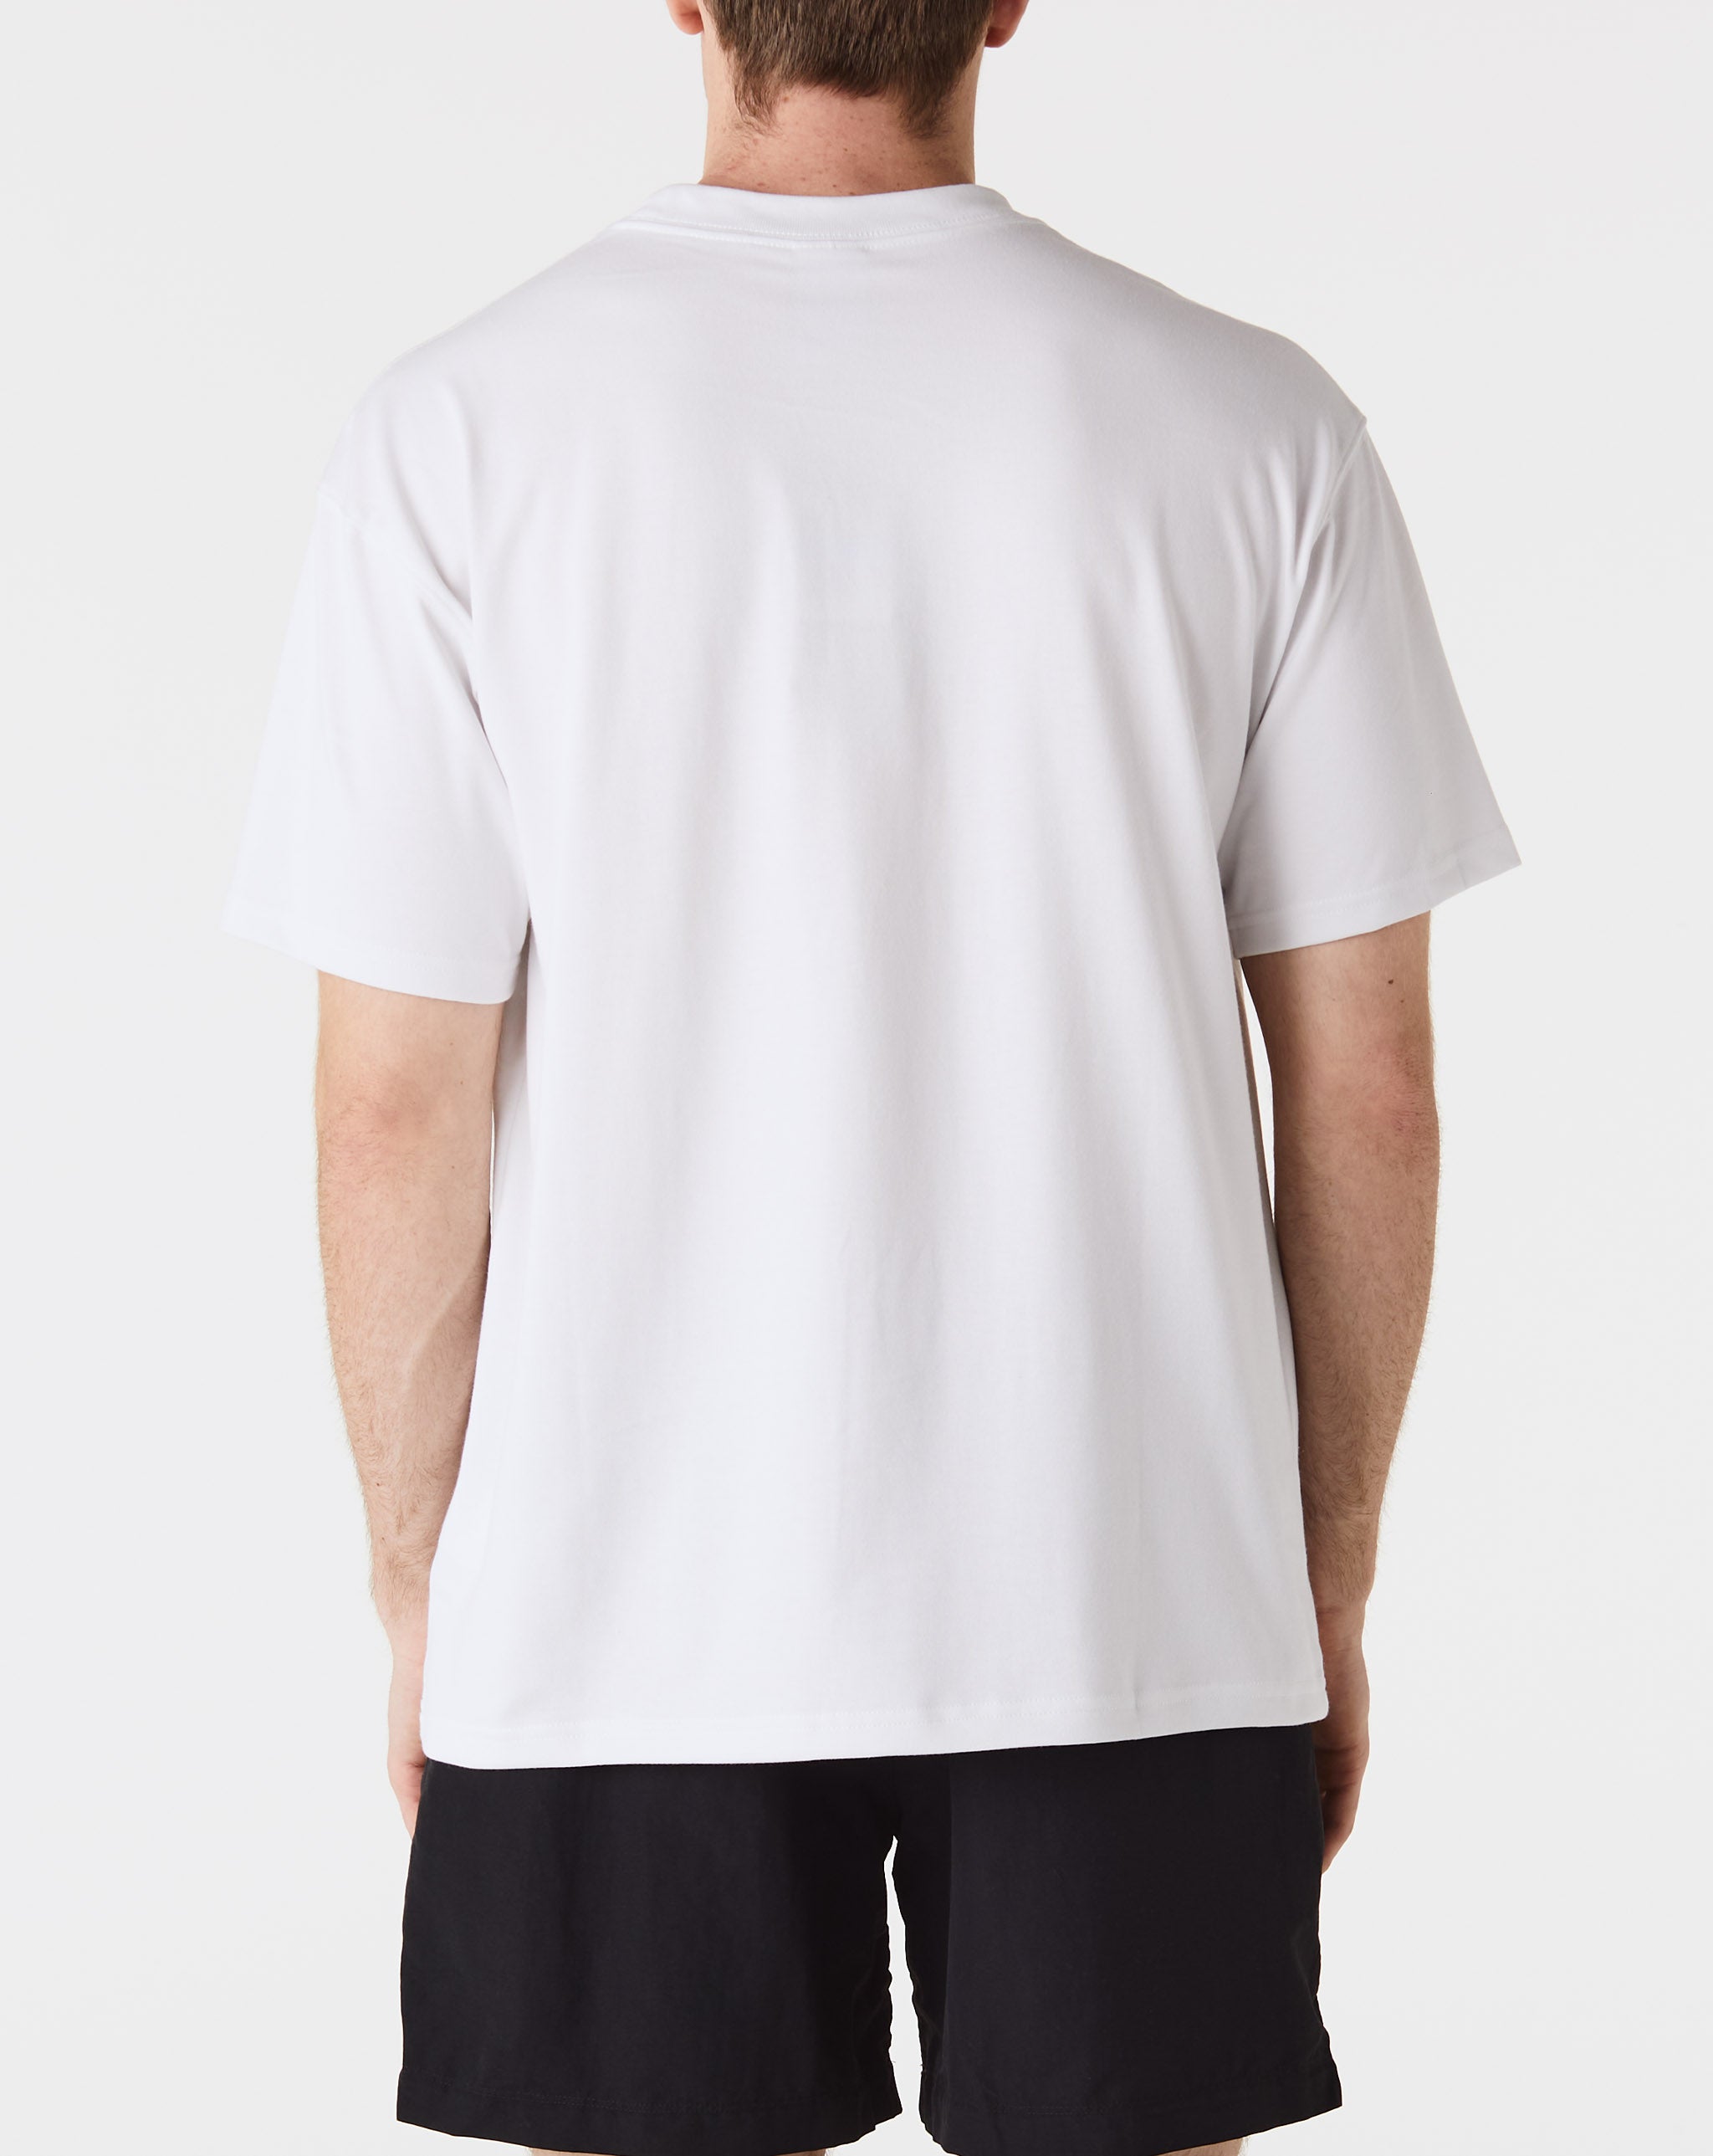 Nike ACG T-Shirt  - XHIBITION